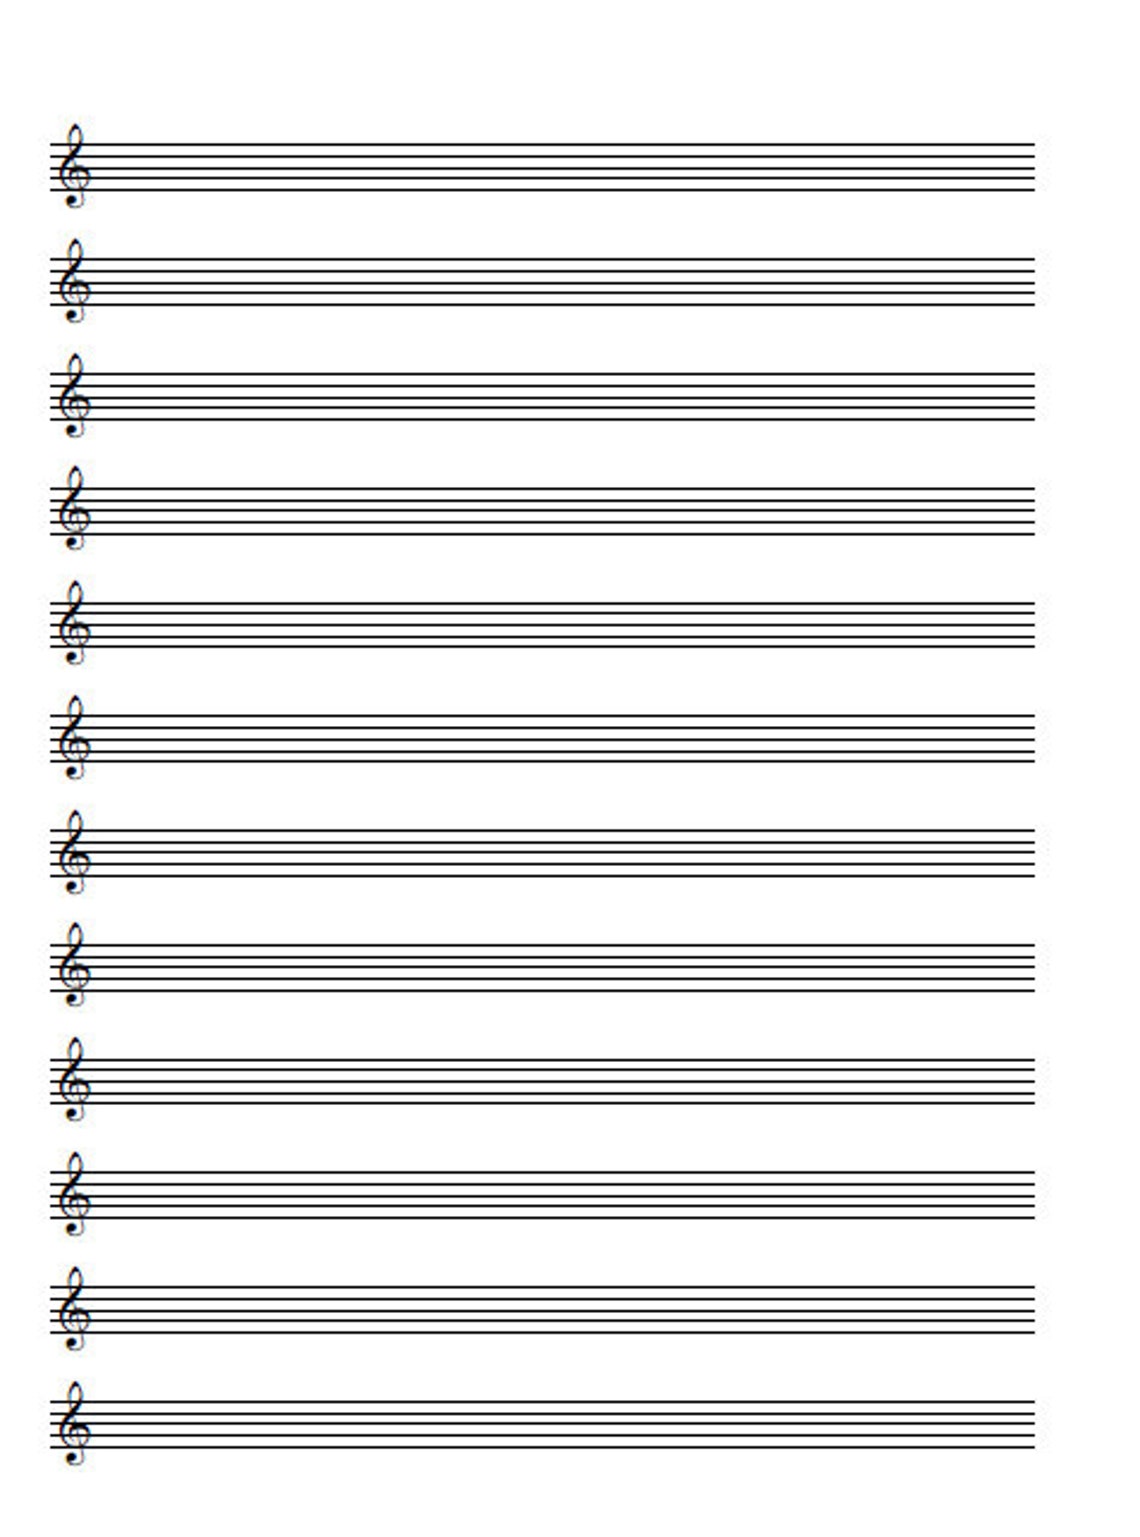 blank-music-sheet-printable